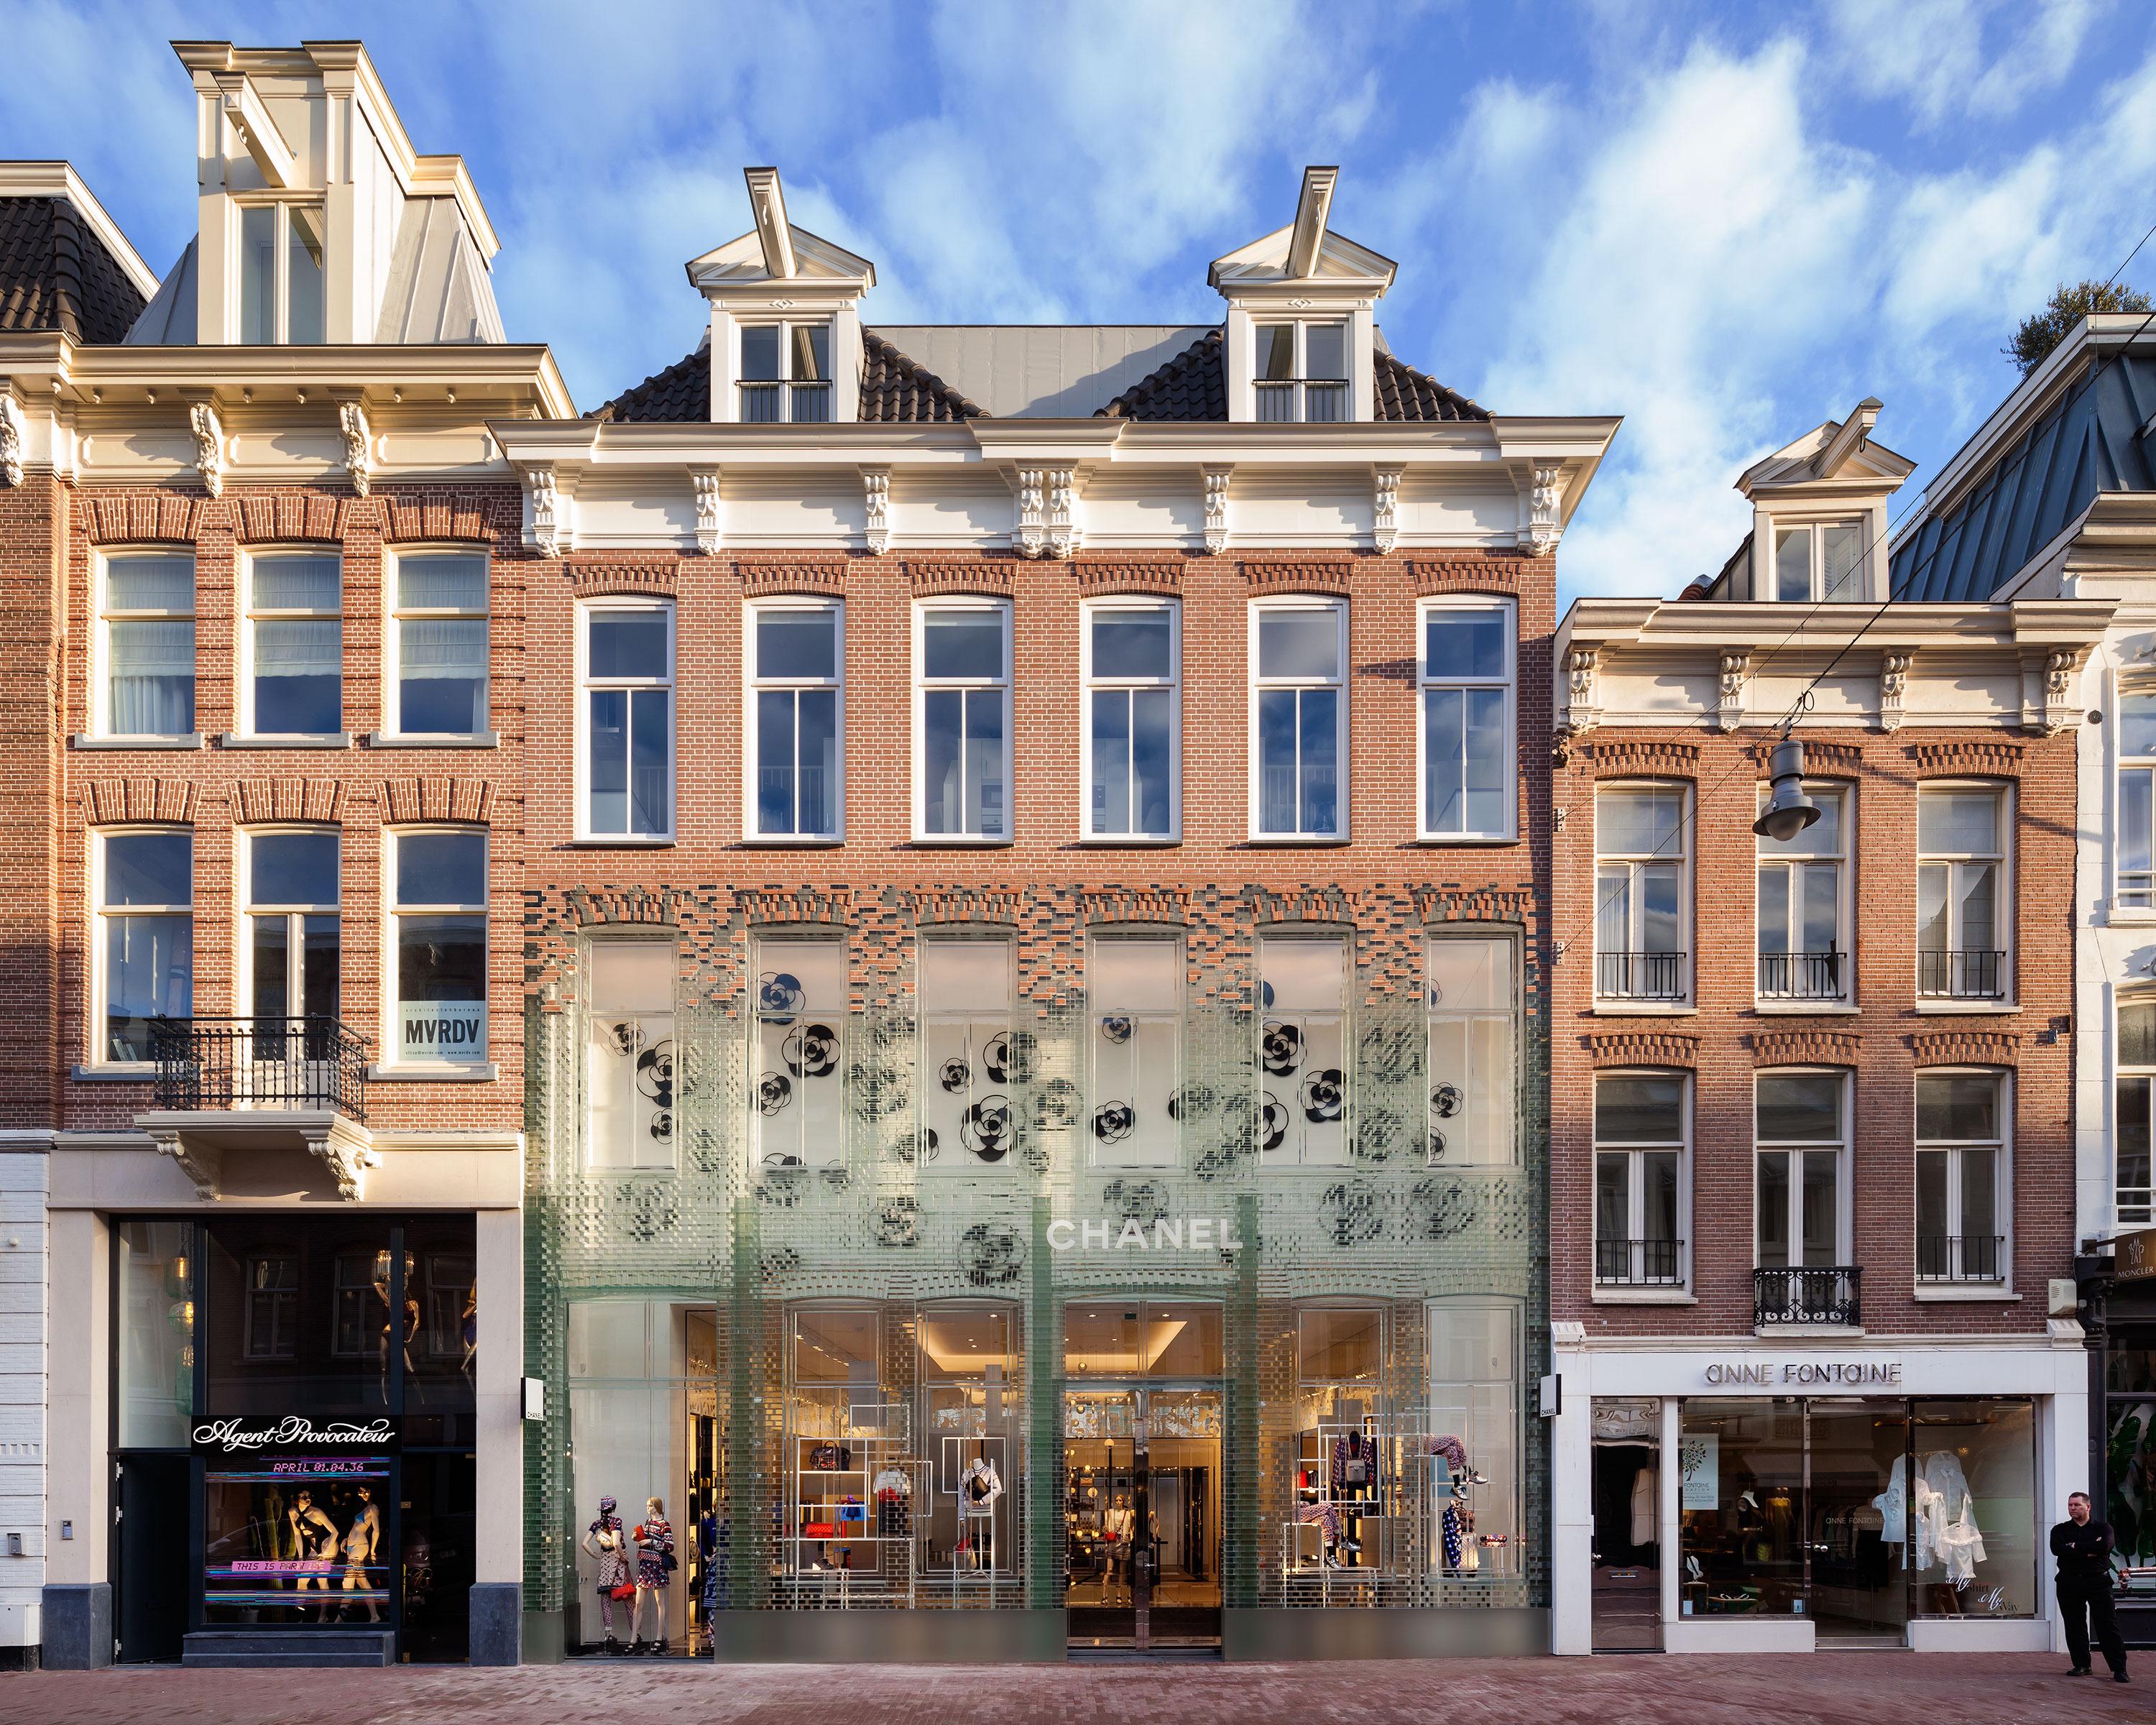 Building shop house. Crystal Houses бюро MVRDV В Амстердаме. Архитектурные бюро MVRDV (Нидерланды). Бутик Шанель в Амстердаме. MVRDV В Амстердаме, Нидерланды.